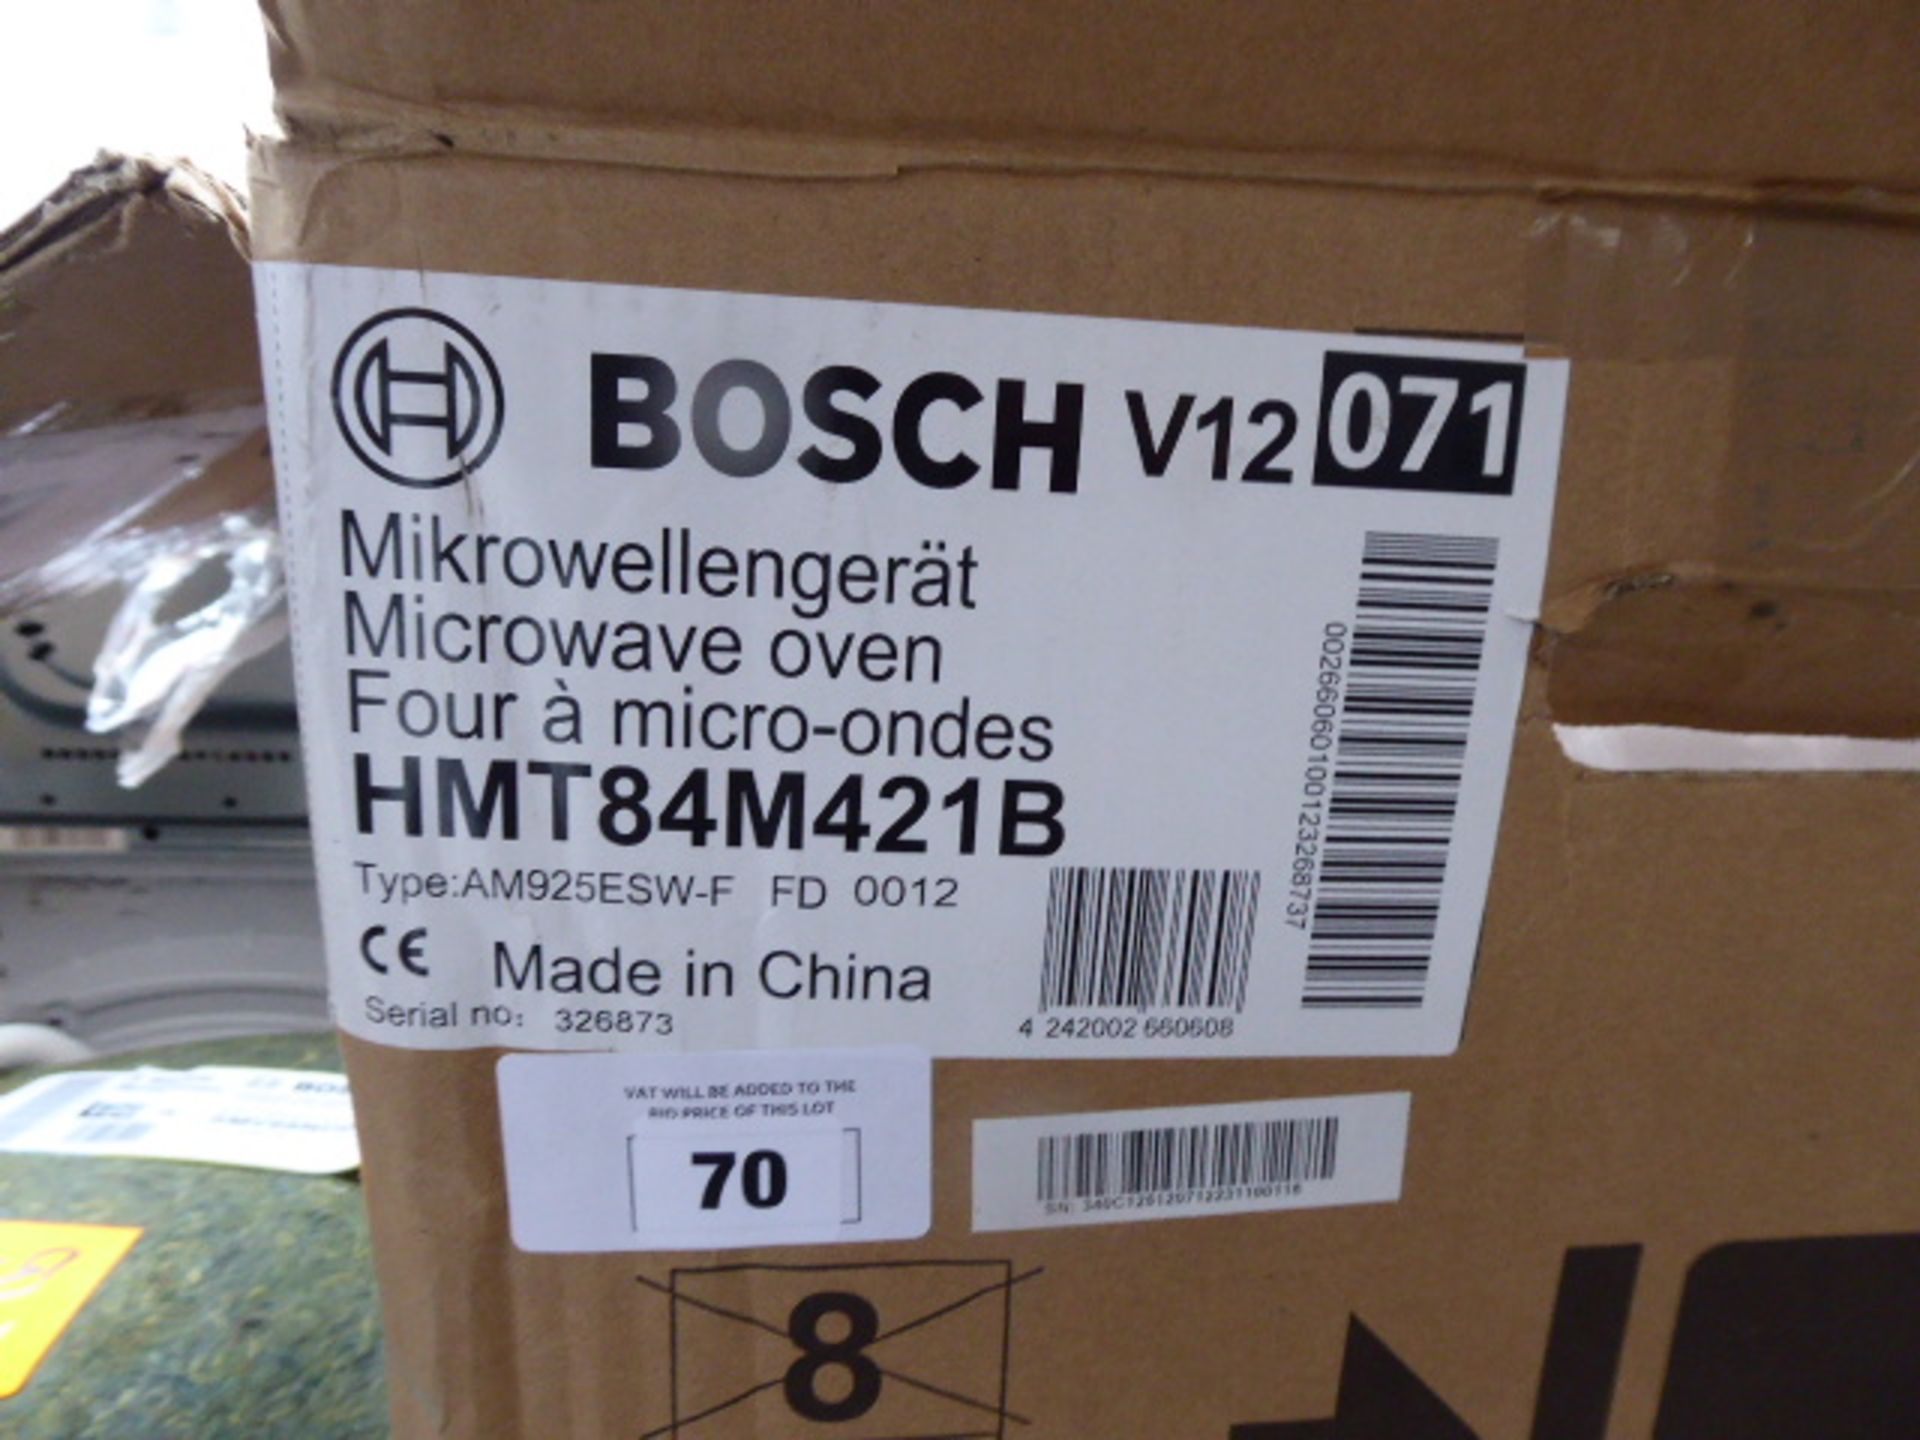 HMT84M421BB Bosch Microwave oven